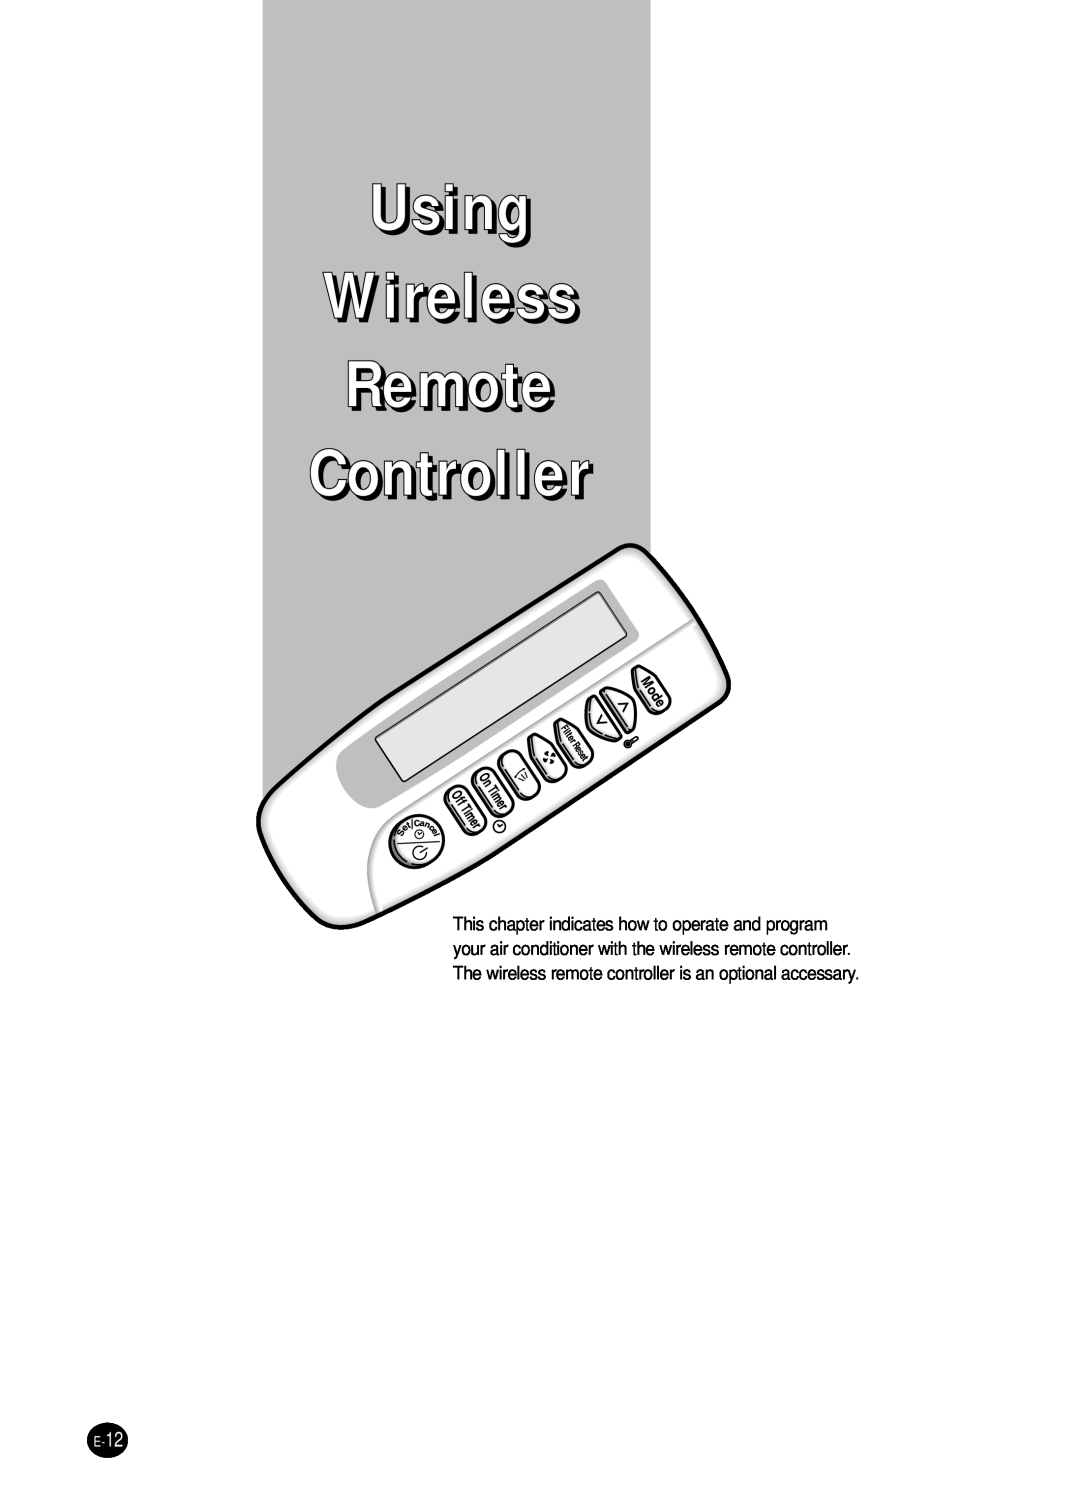 Samsung AVMDC070EA(B)0, AVMDH052CA0, AVMHC128CA0, AVMHC128EA(B)0, AVMHH128CA0 Using Wireless Remote Controller, E-12 